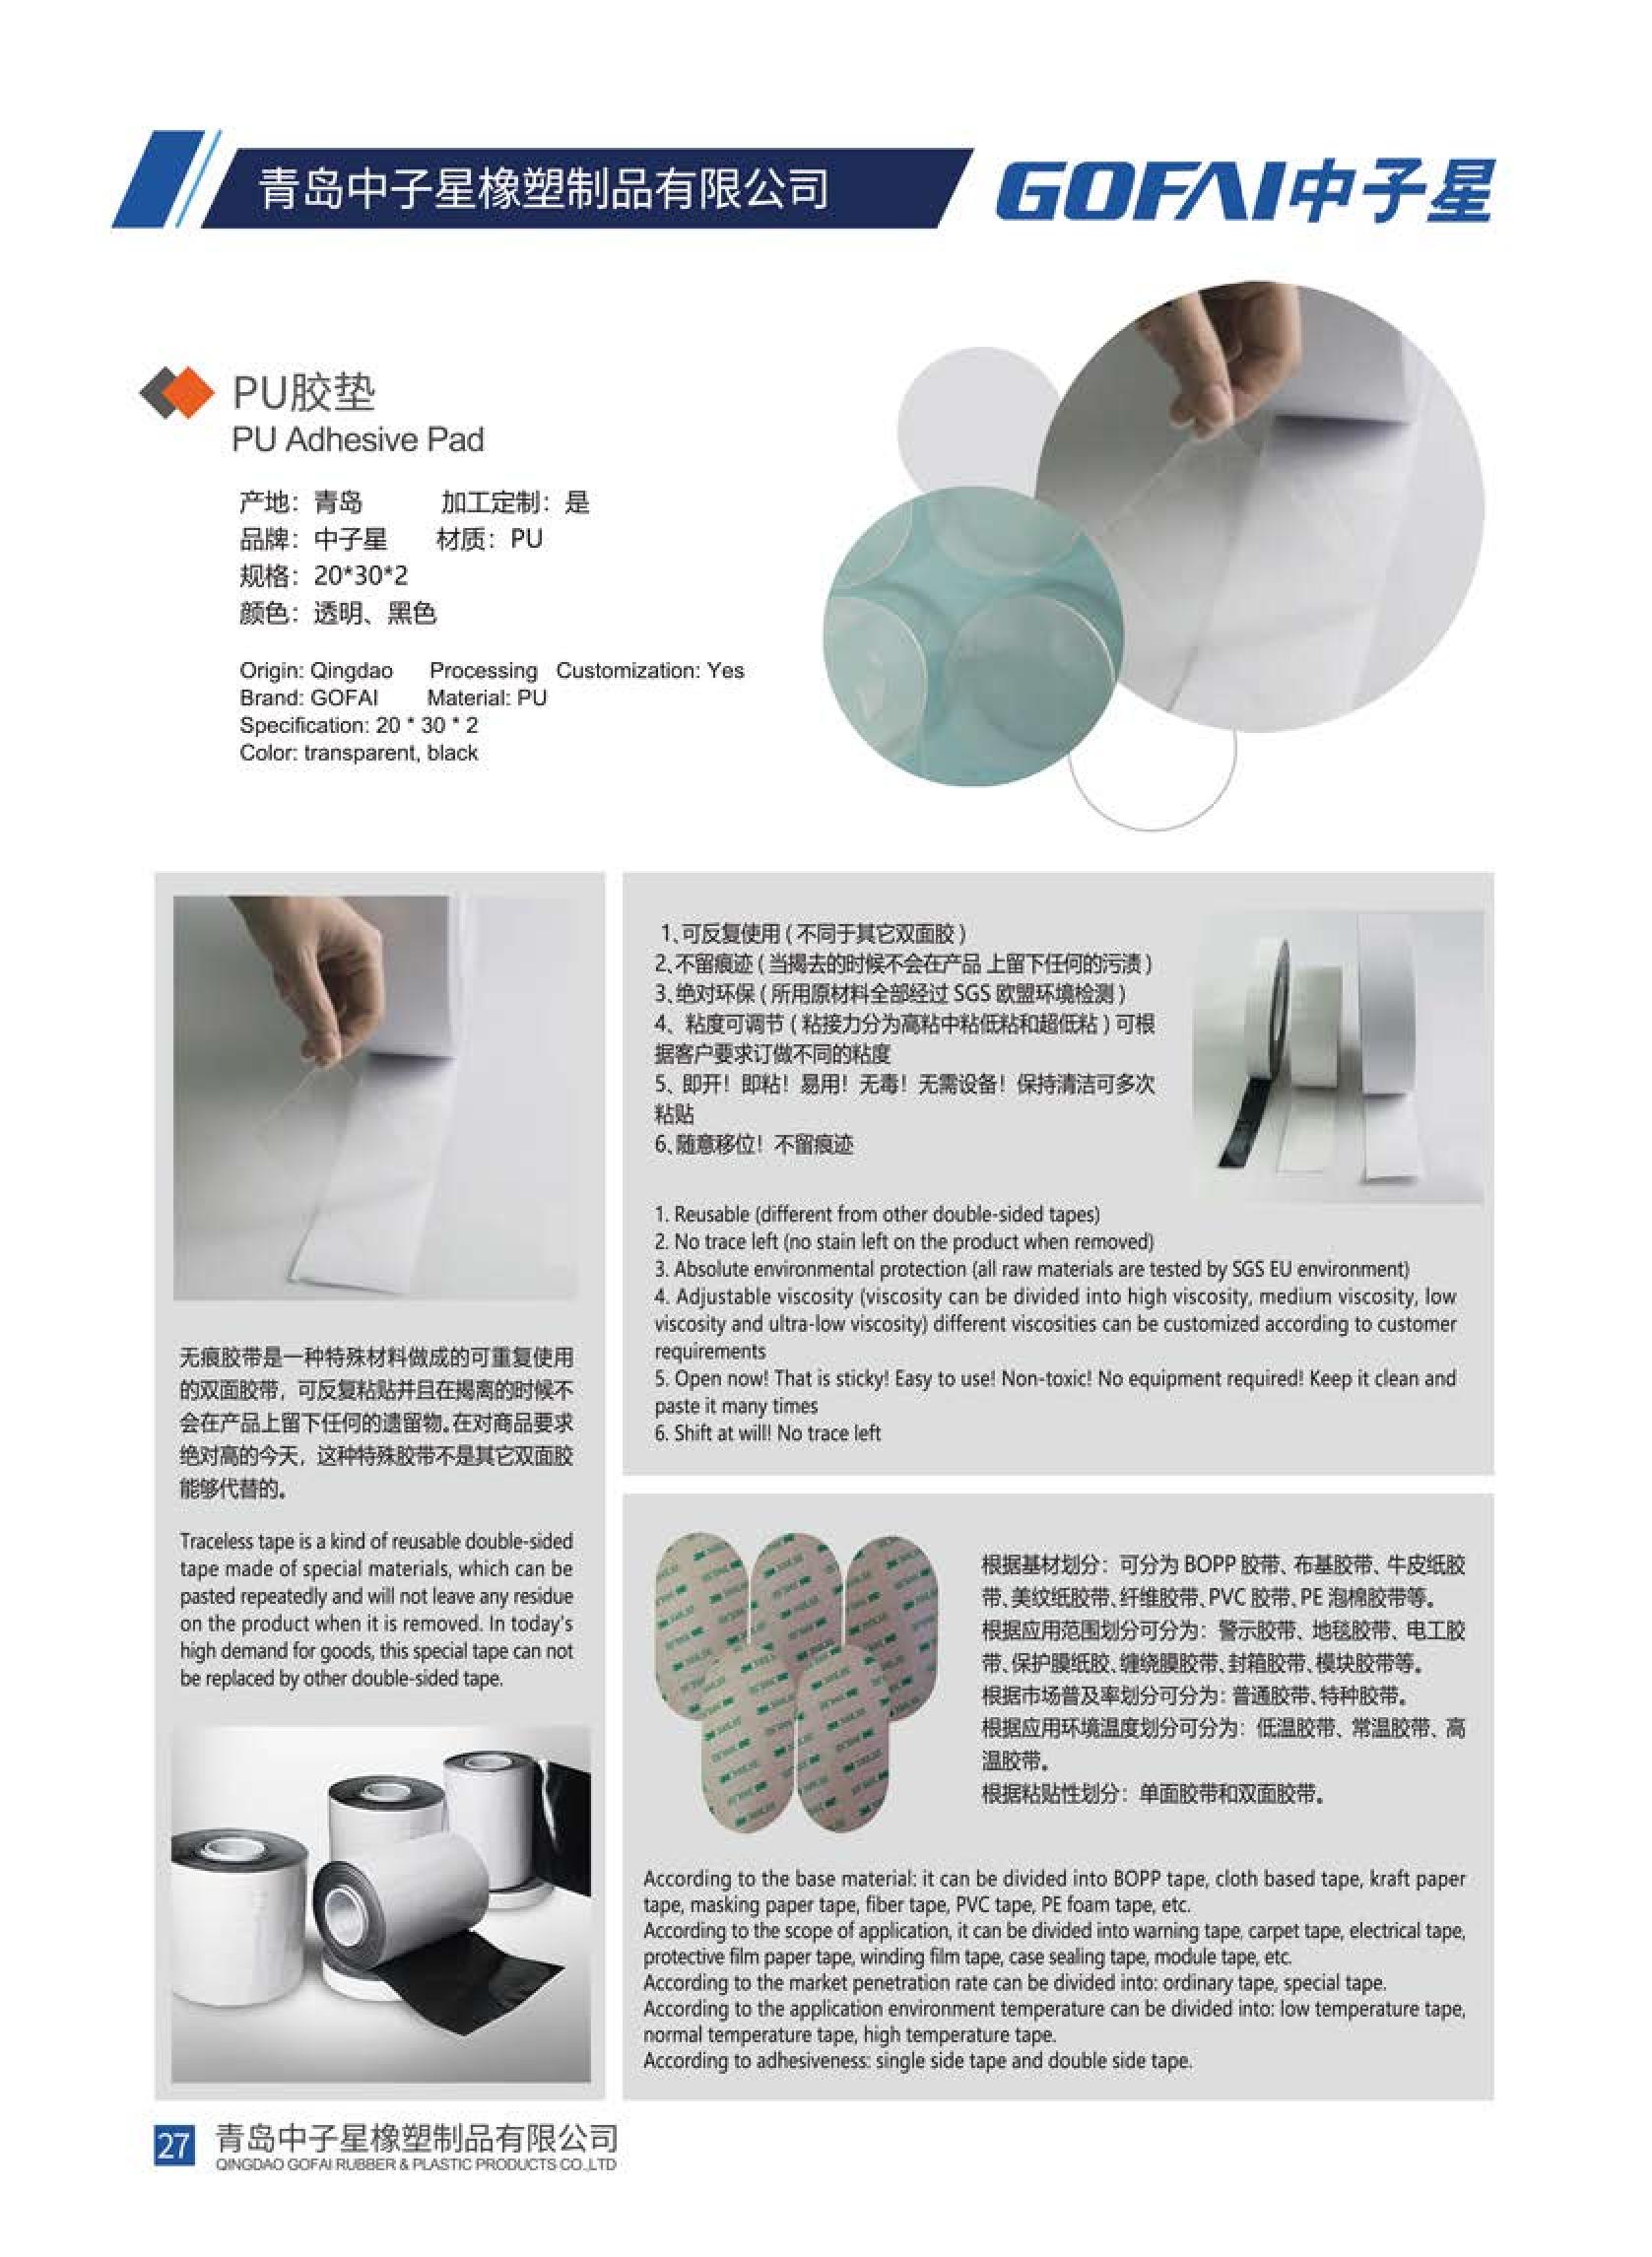 GOFAI self adhesive rubber pad catalog_29.jpg